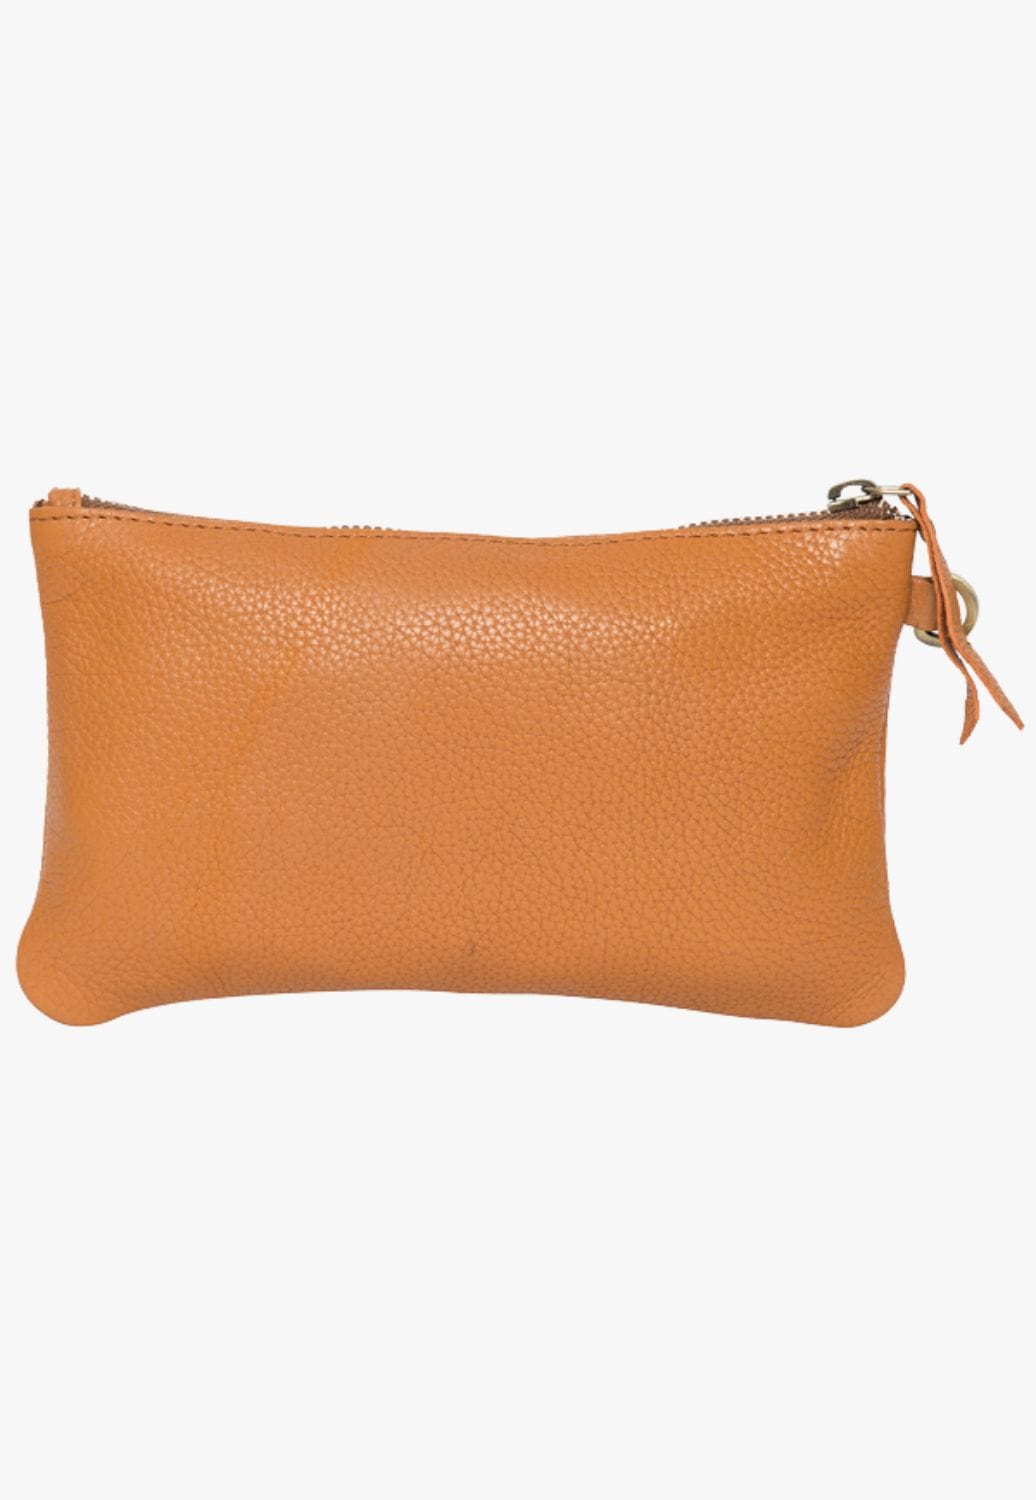 The Design Edge ACCESSORIES-Handbags Tan The Design Edge Toronto Small Cowhide Clutch